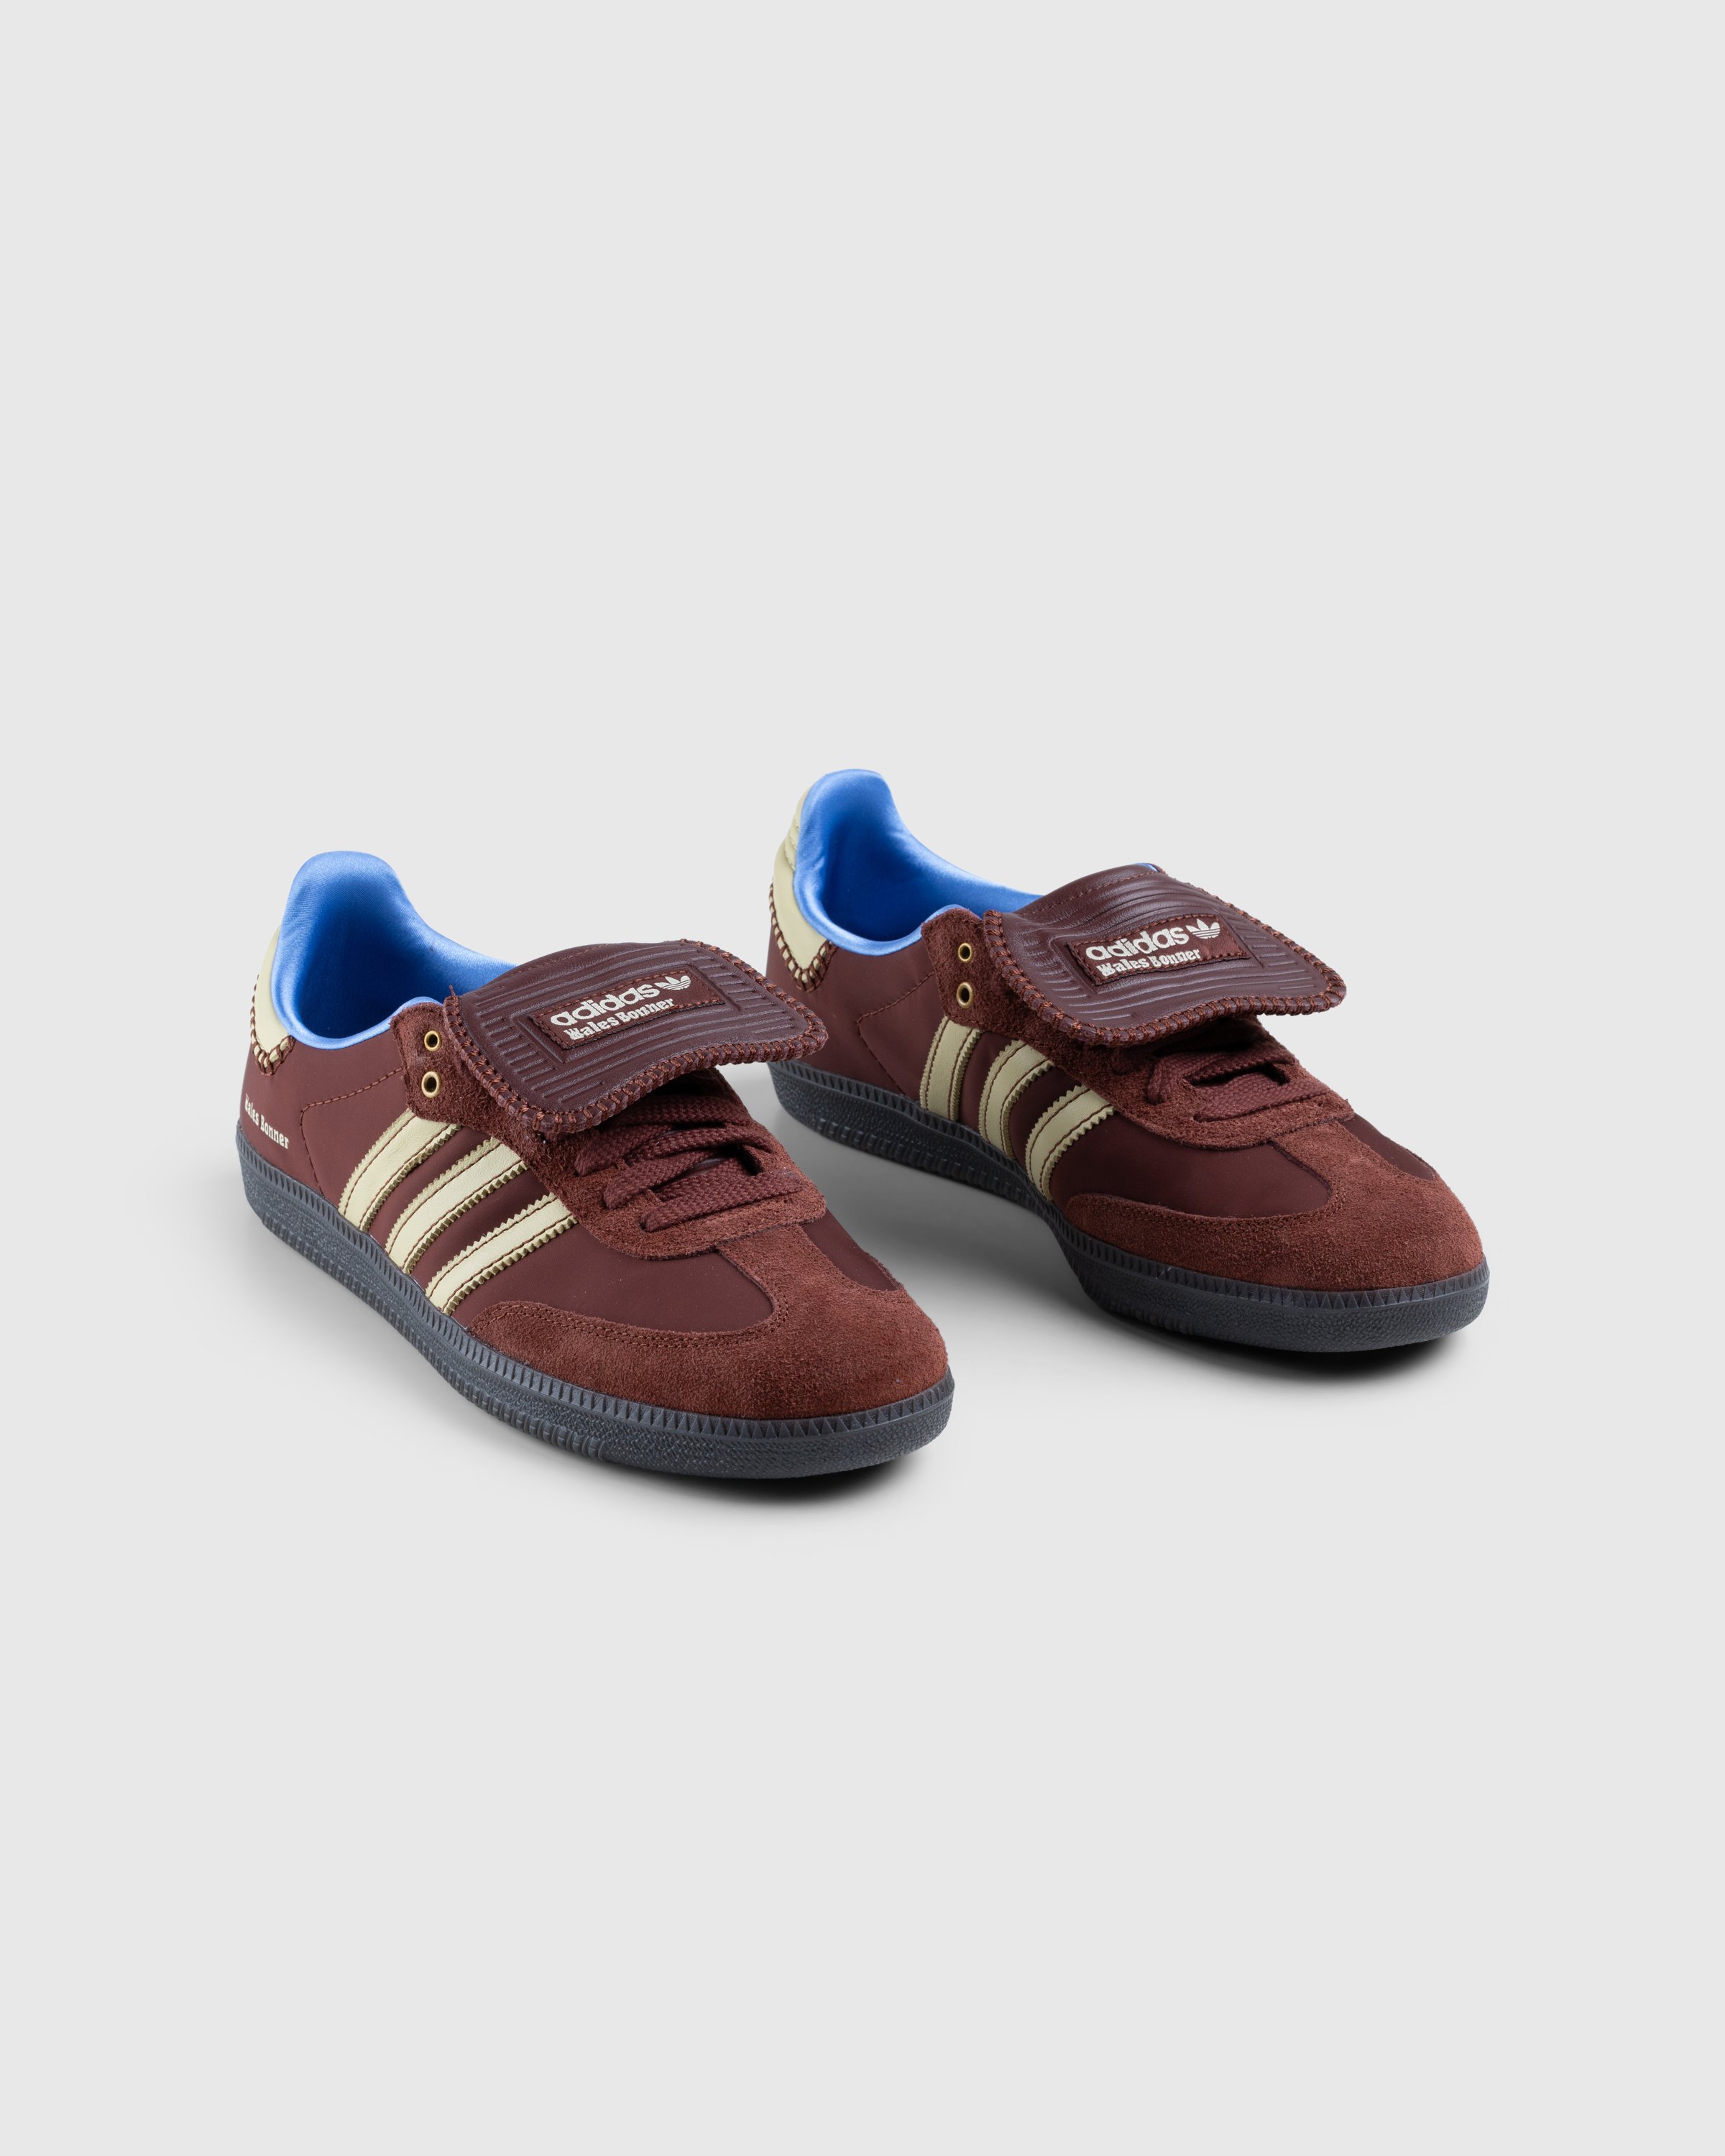 Adidas x Wales Bonner - WB NYLON SAMBA FOXBRN/SANBEI/LUCBLU - Footwear - Brown - Image 3